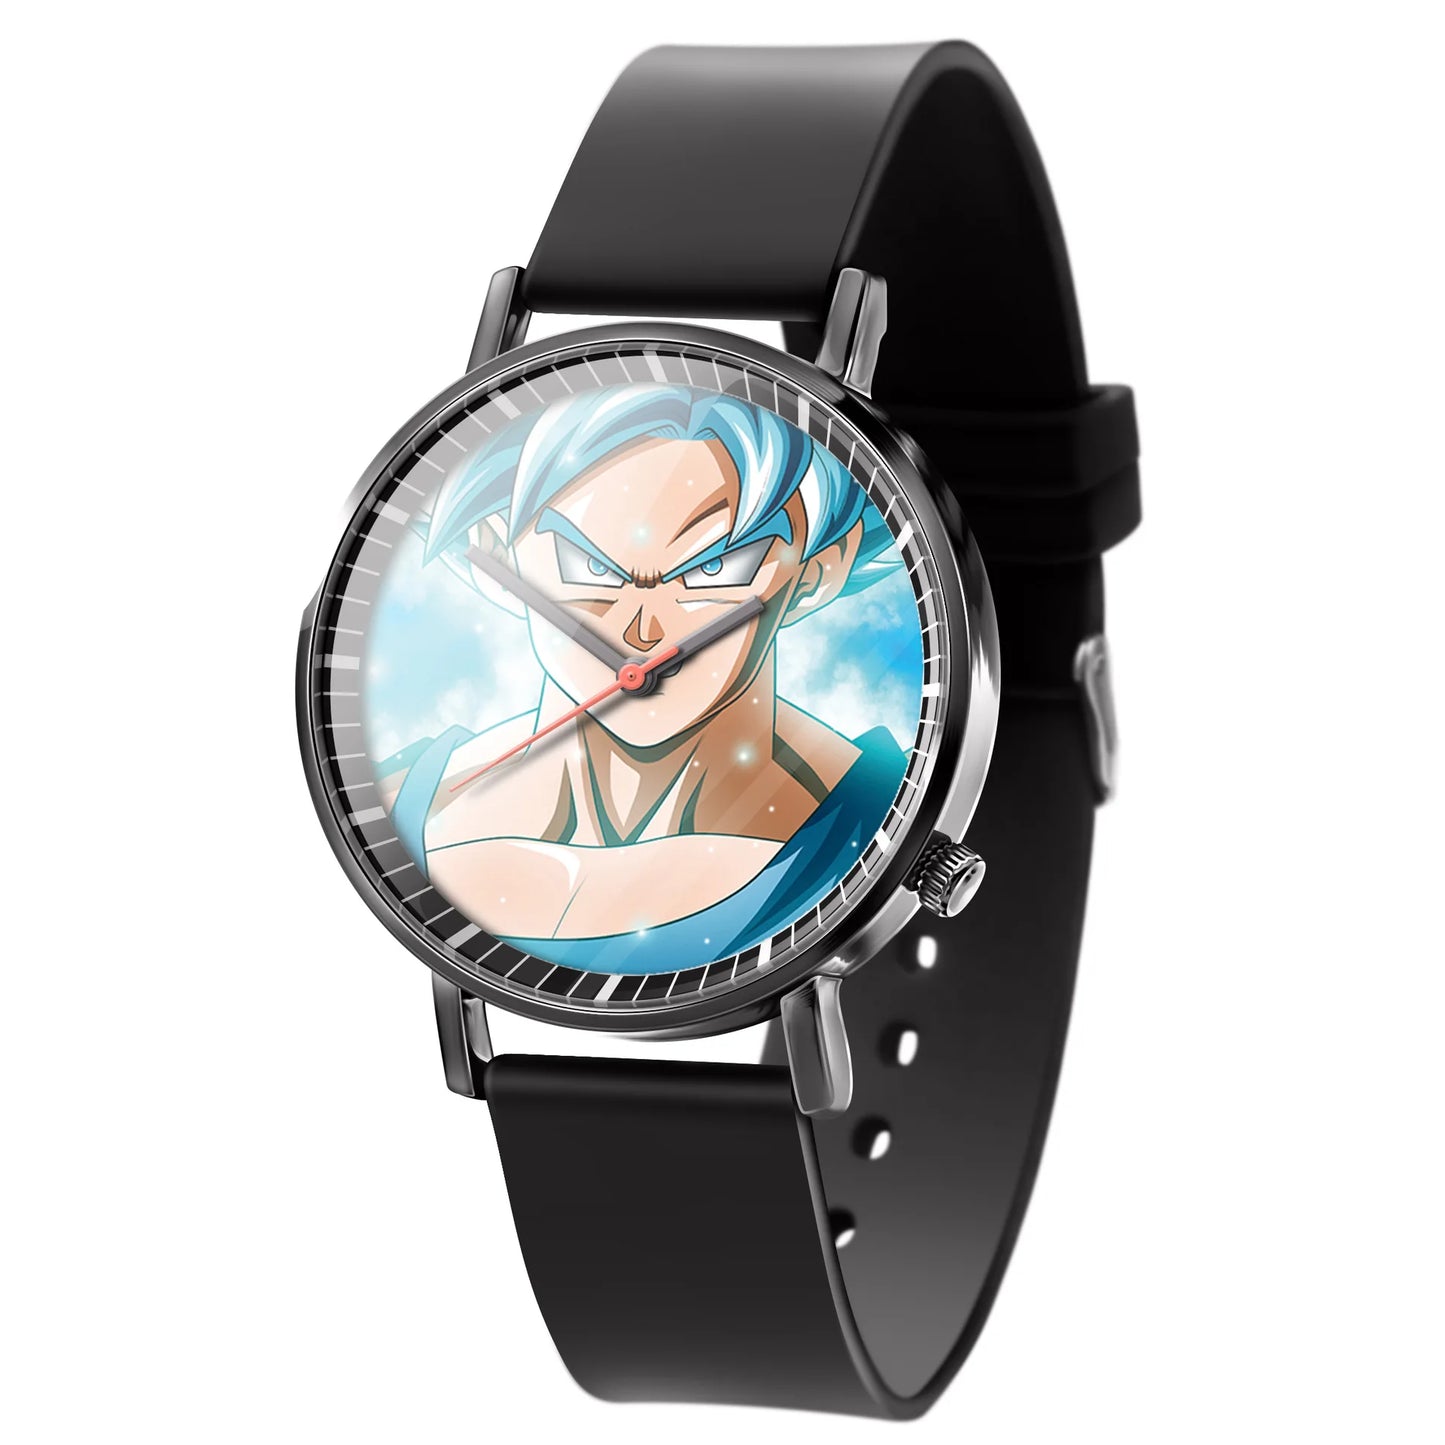 Dragon Ball Z Watch Goku Saiyans Wristwatch Leather Printing Watch Cartoon Anime Quartz Electronic Watch Toy Birthday Party Gift-Dragon ball-11-